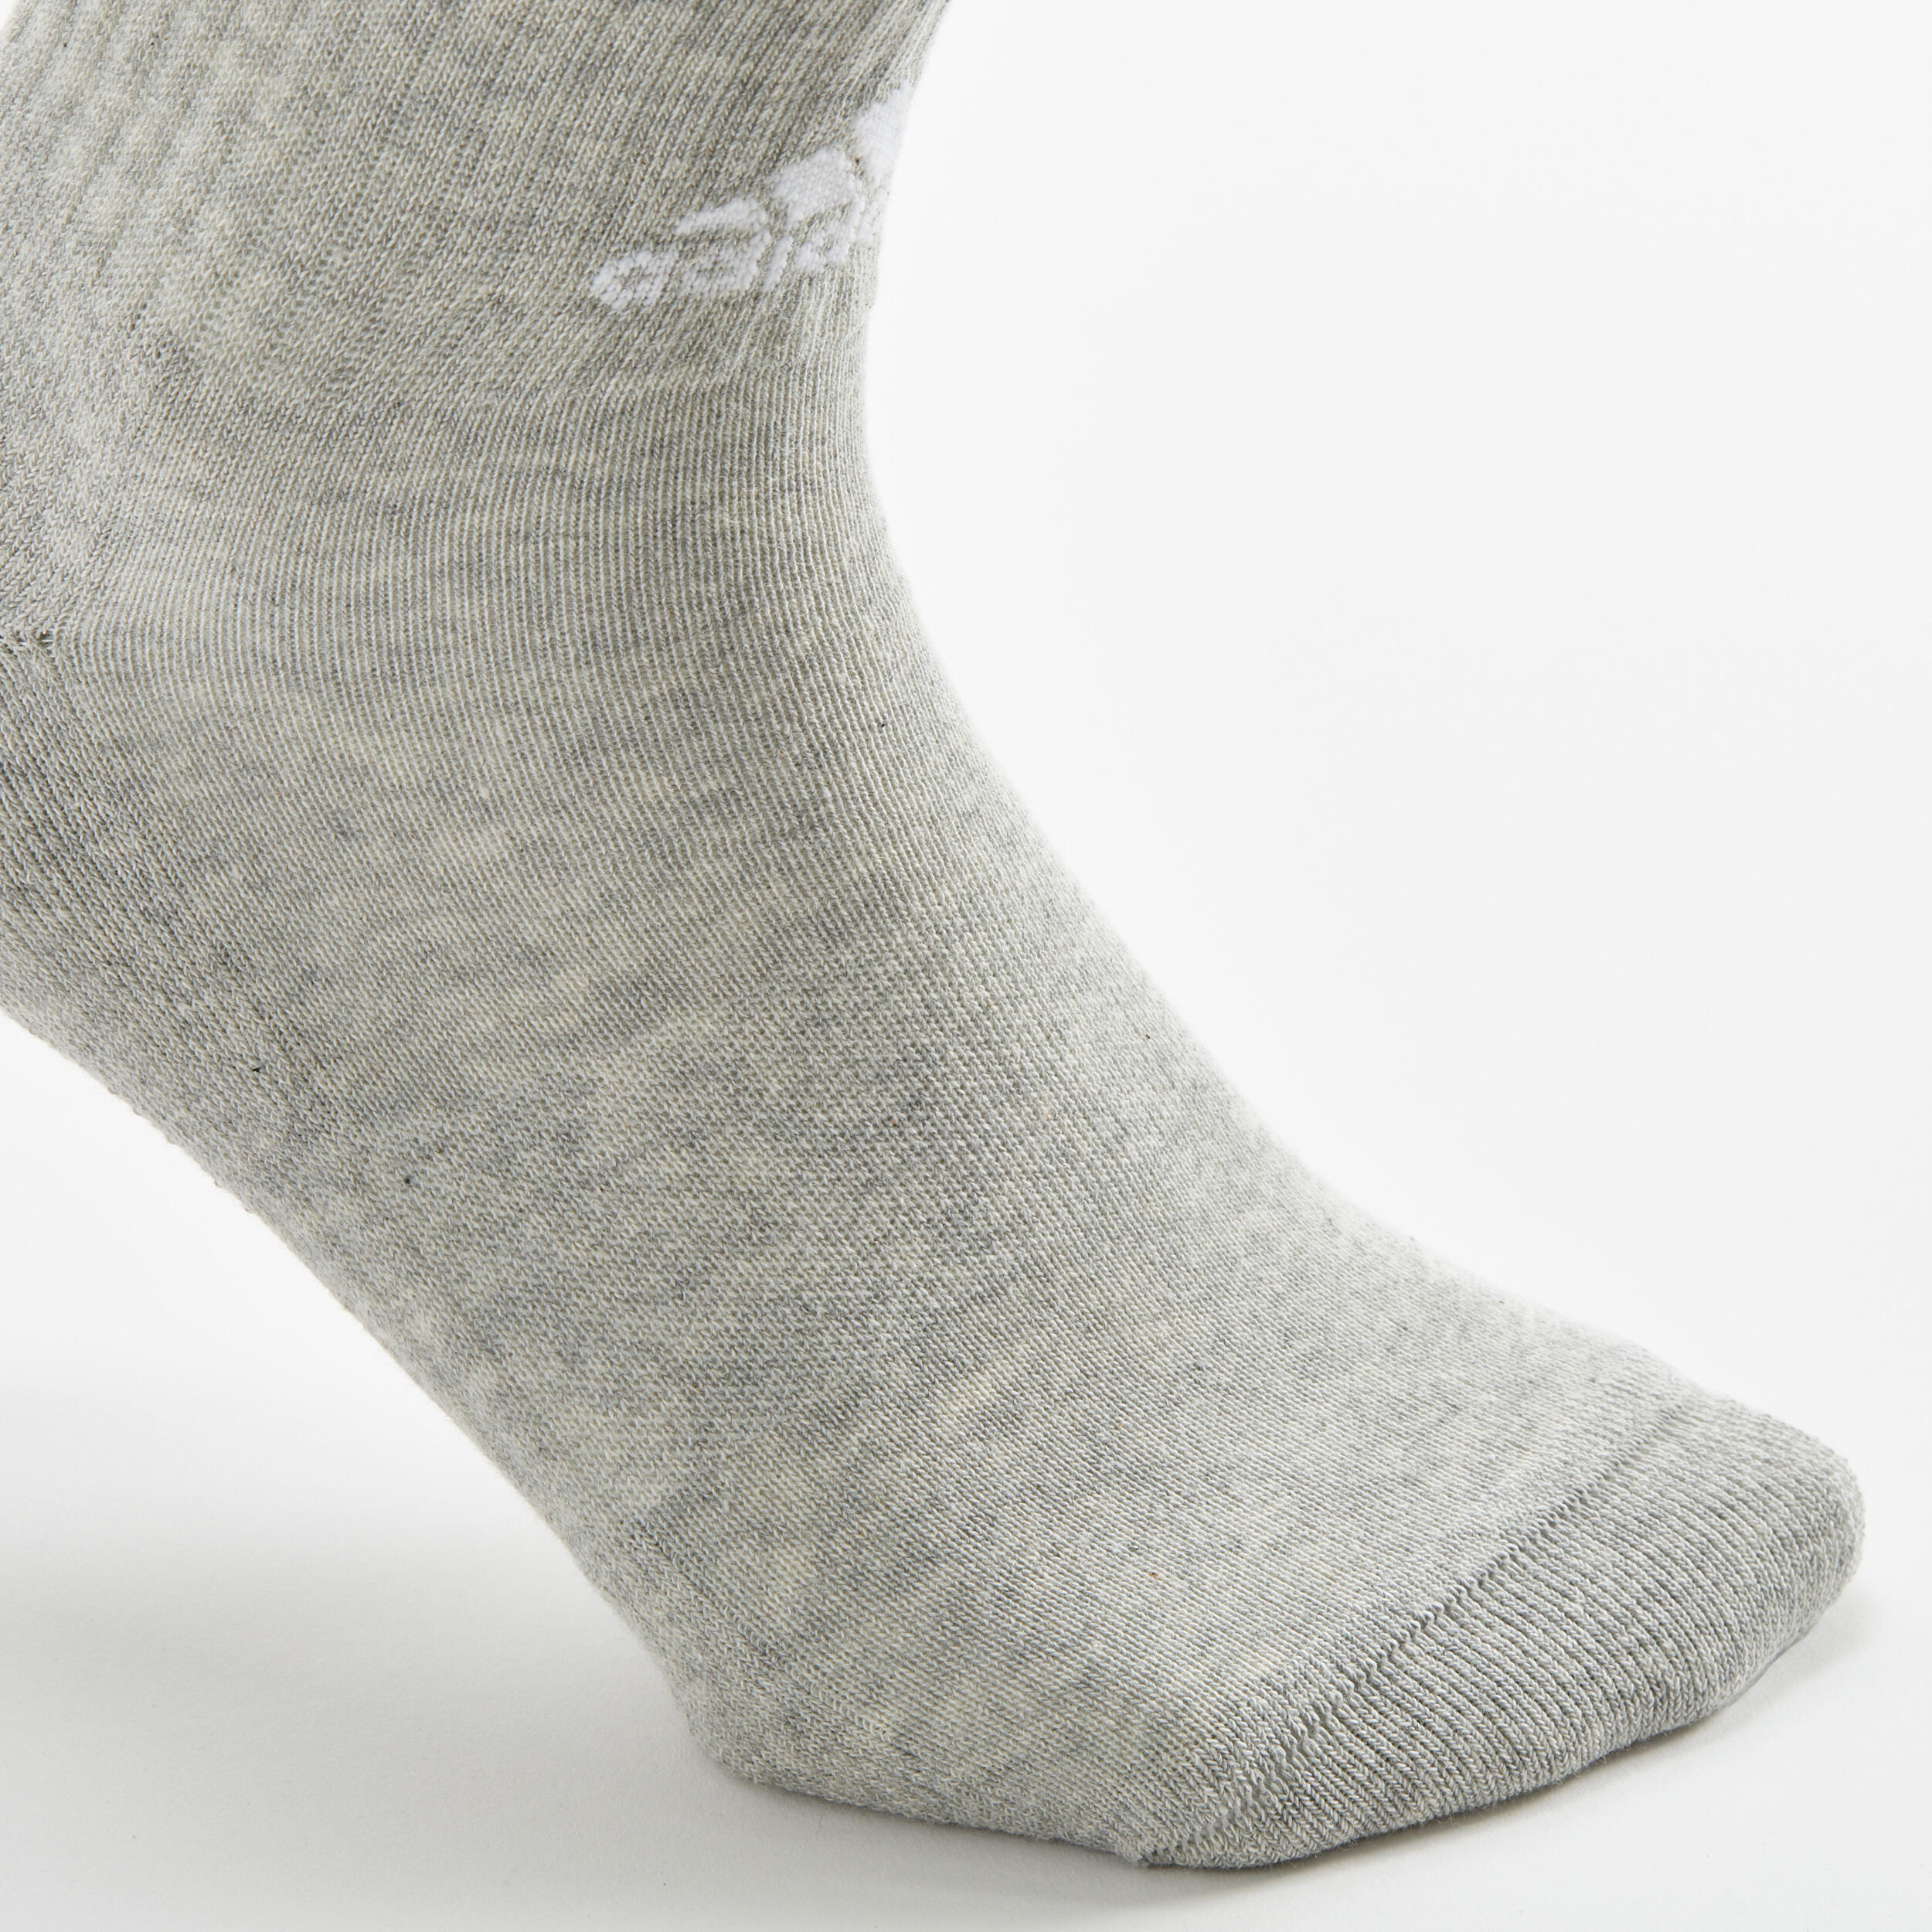 High Sports Socks 3-Pack Stripes - Black/White/Grey 11/13